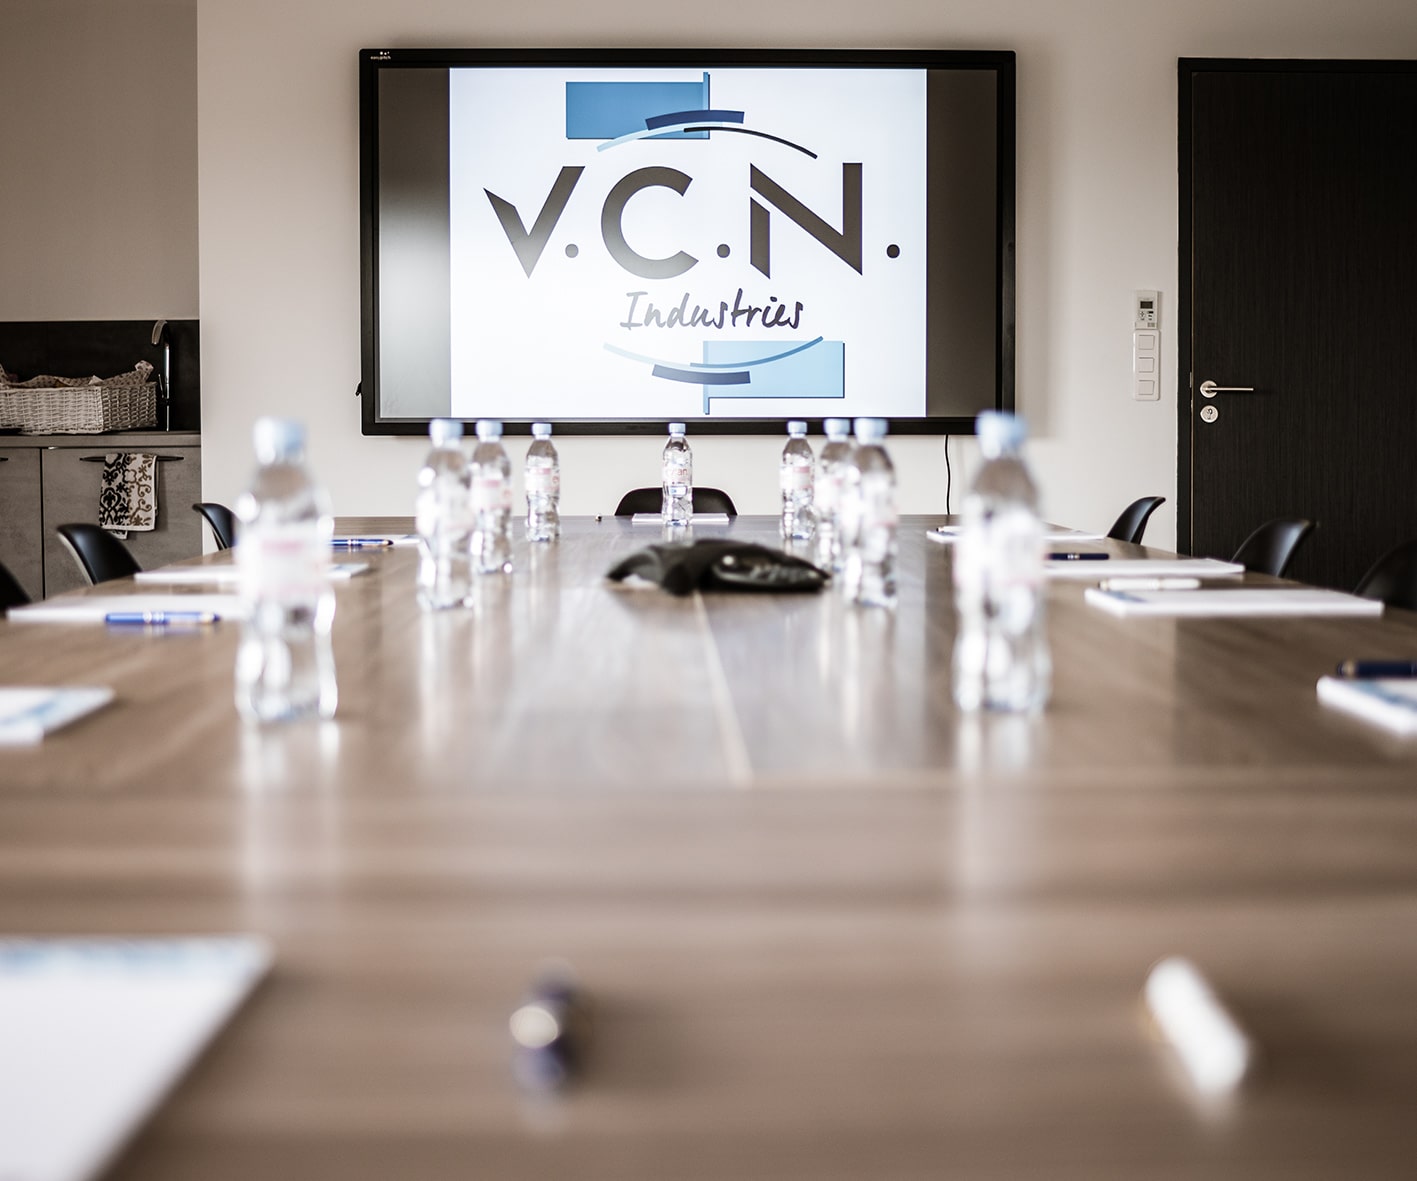 VCN Industries